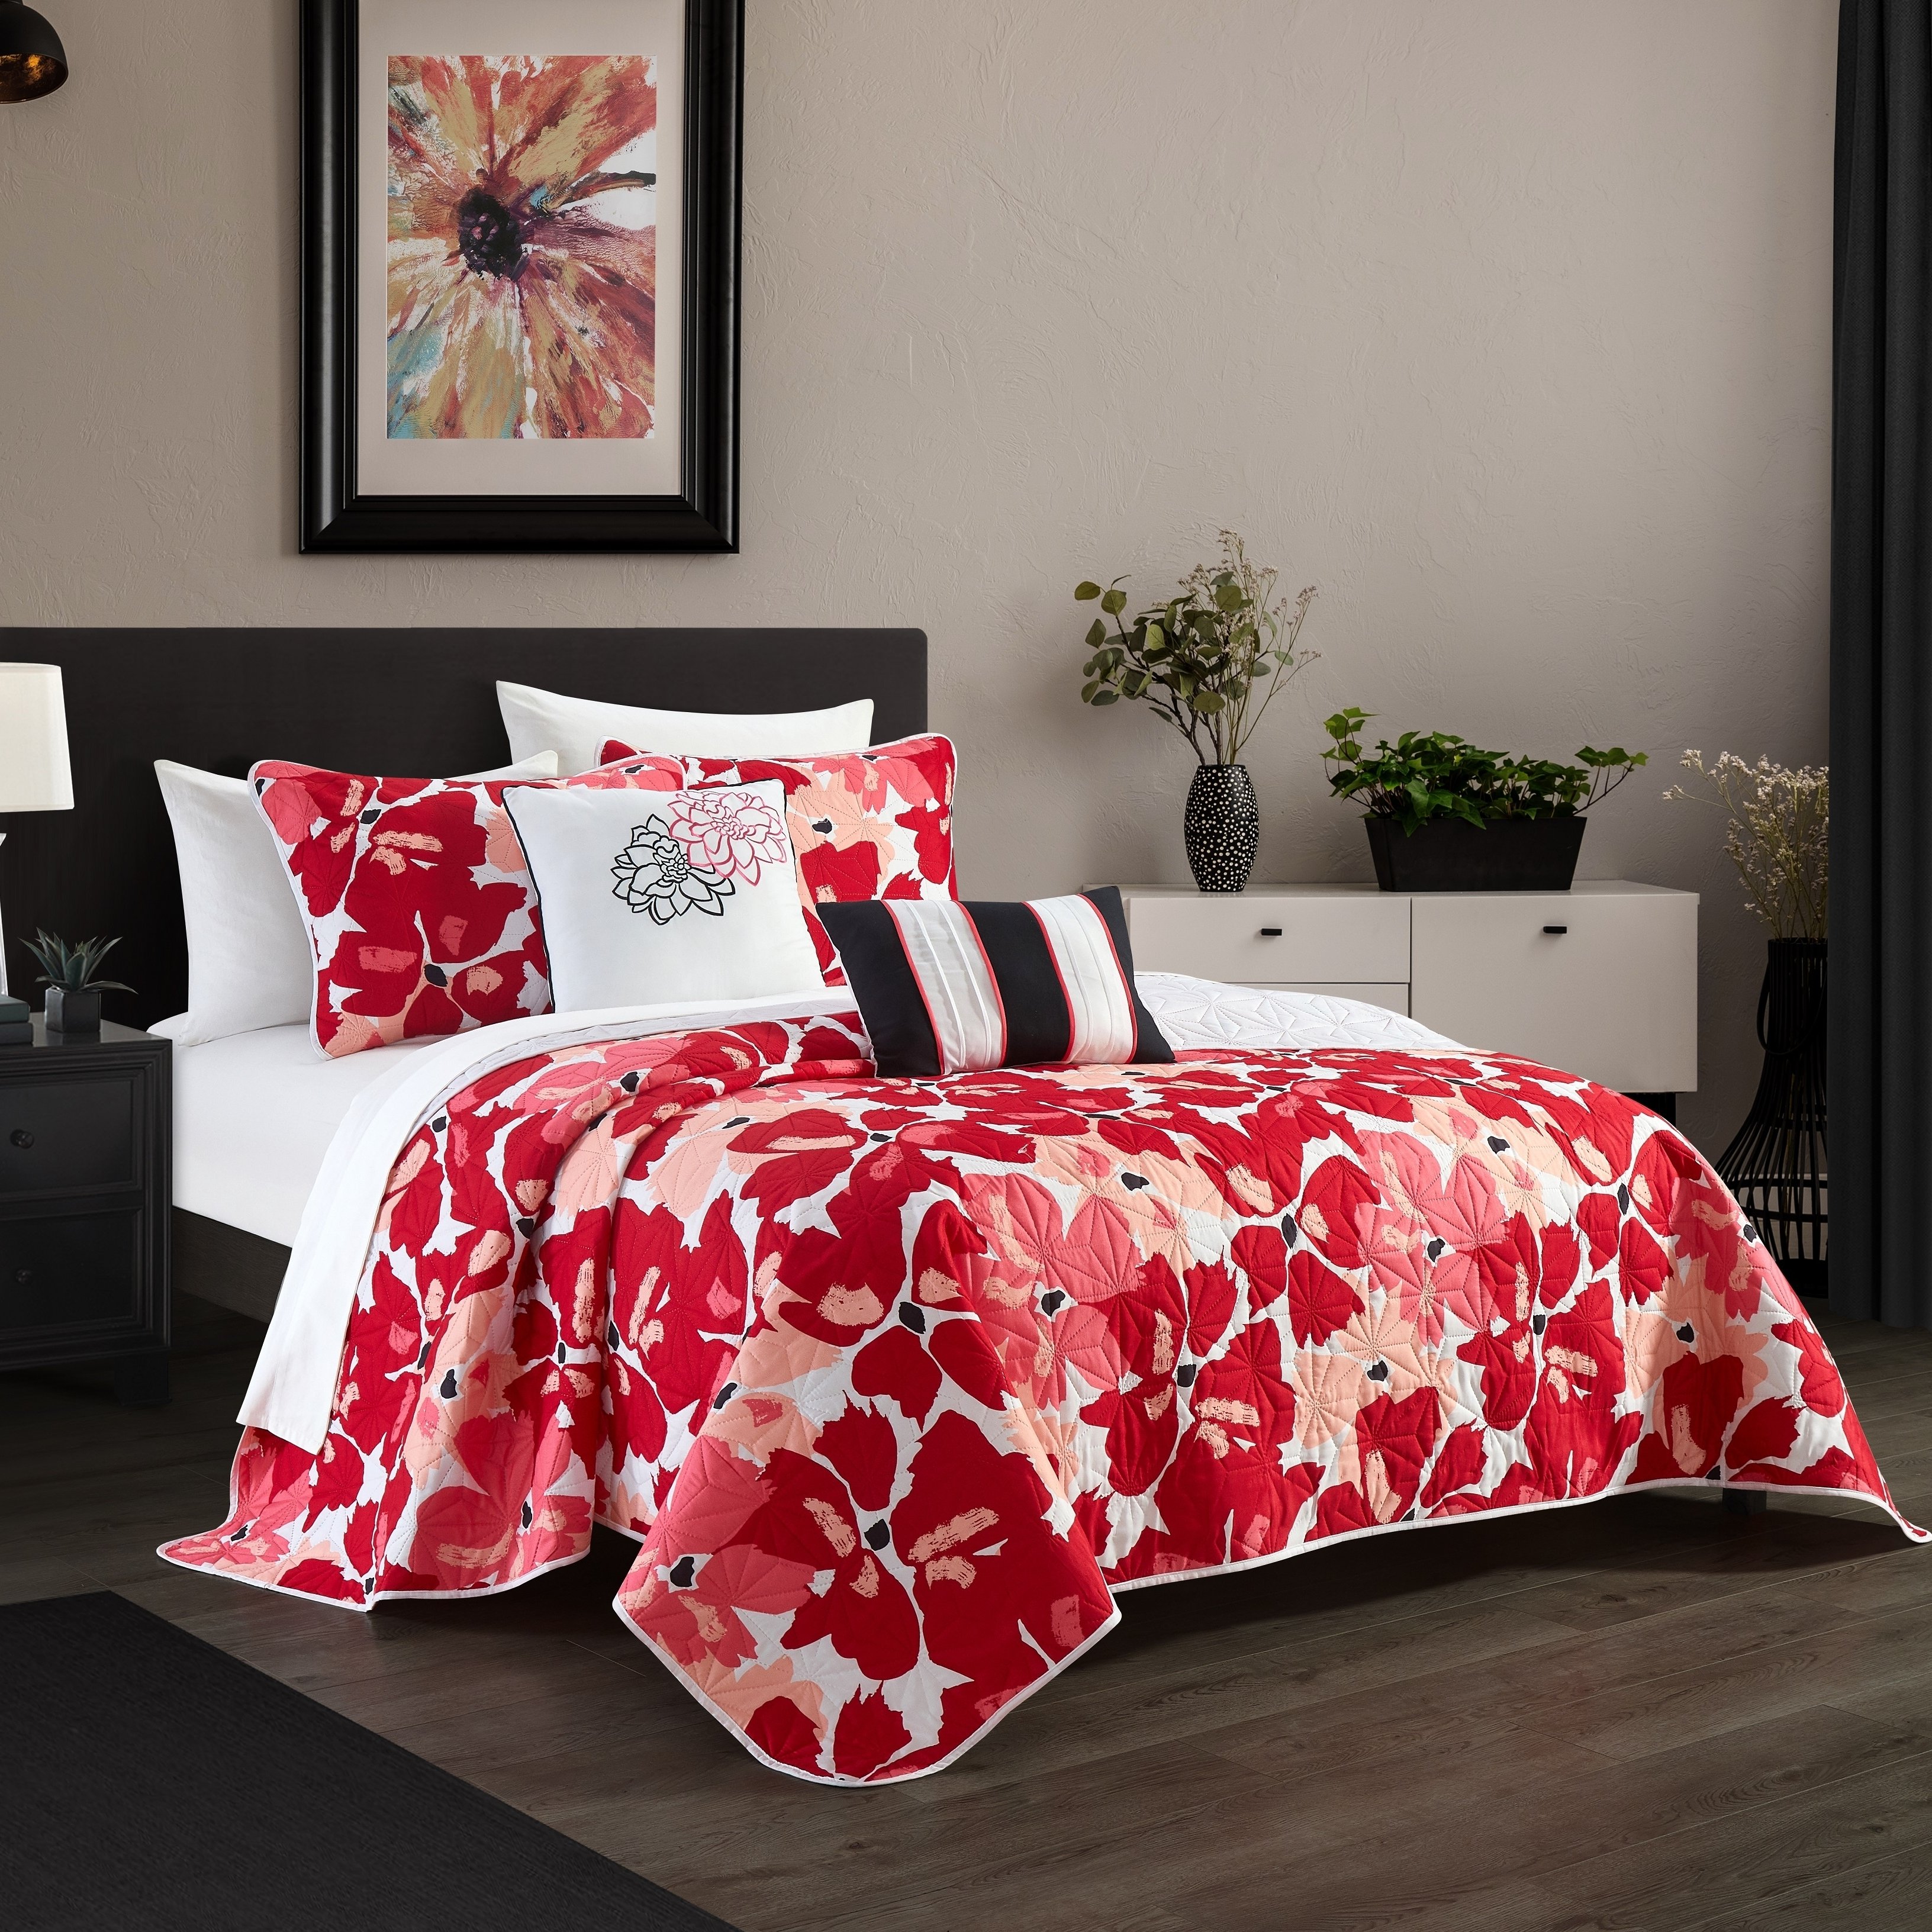 Aster 5 Piece Quilt Set Contemporary Floral Design Bedding - Black, King